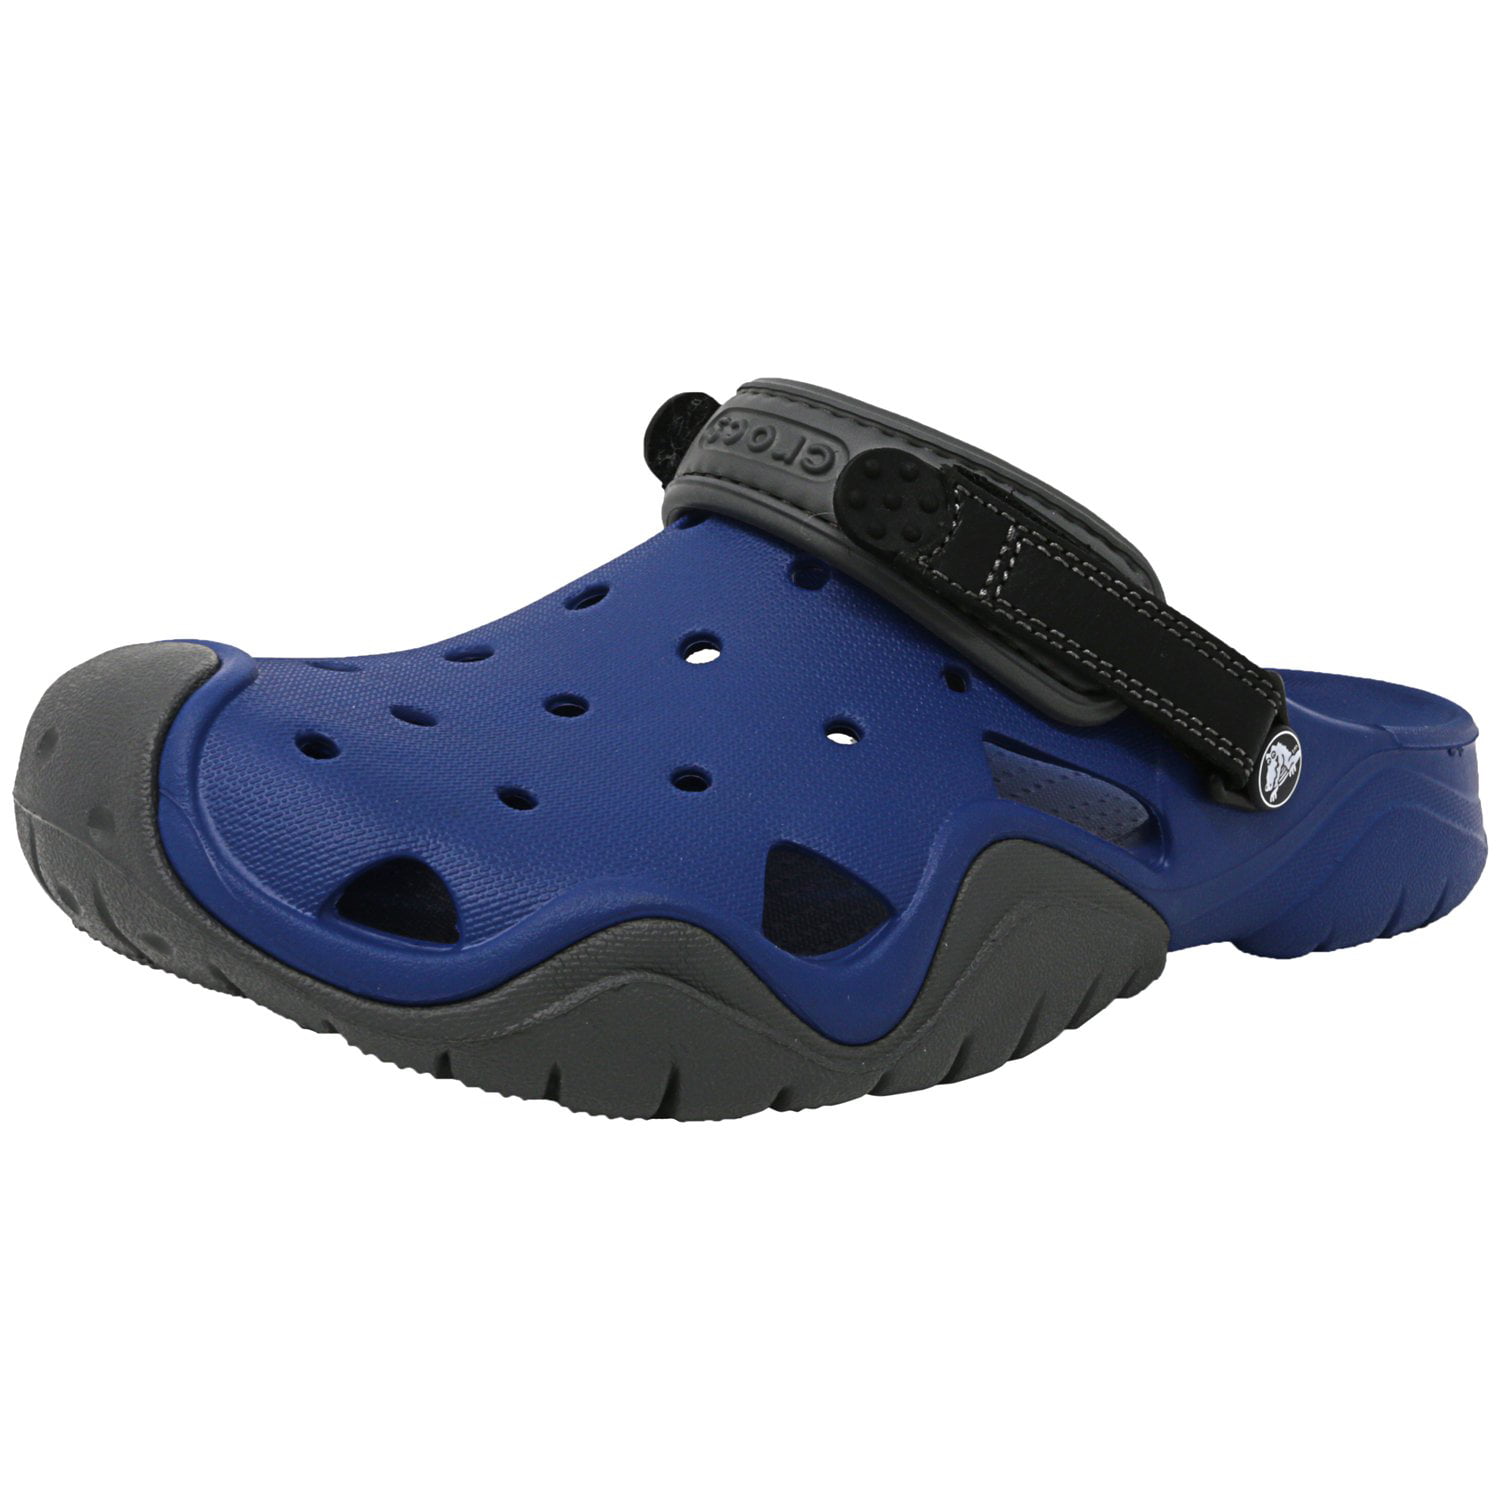 Crocs - Crocs Men's Swiftwater Clog Blue Jean / Slate Grey Ankle-High ...